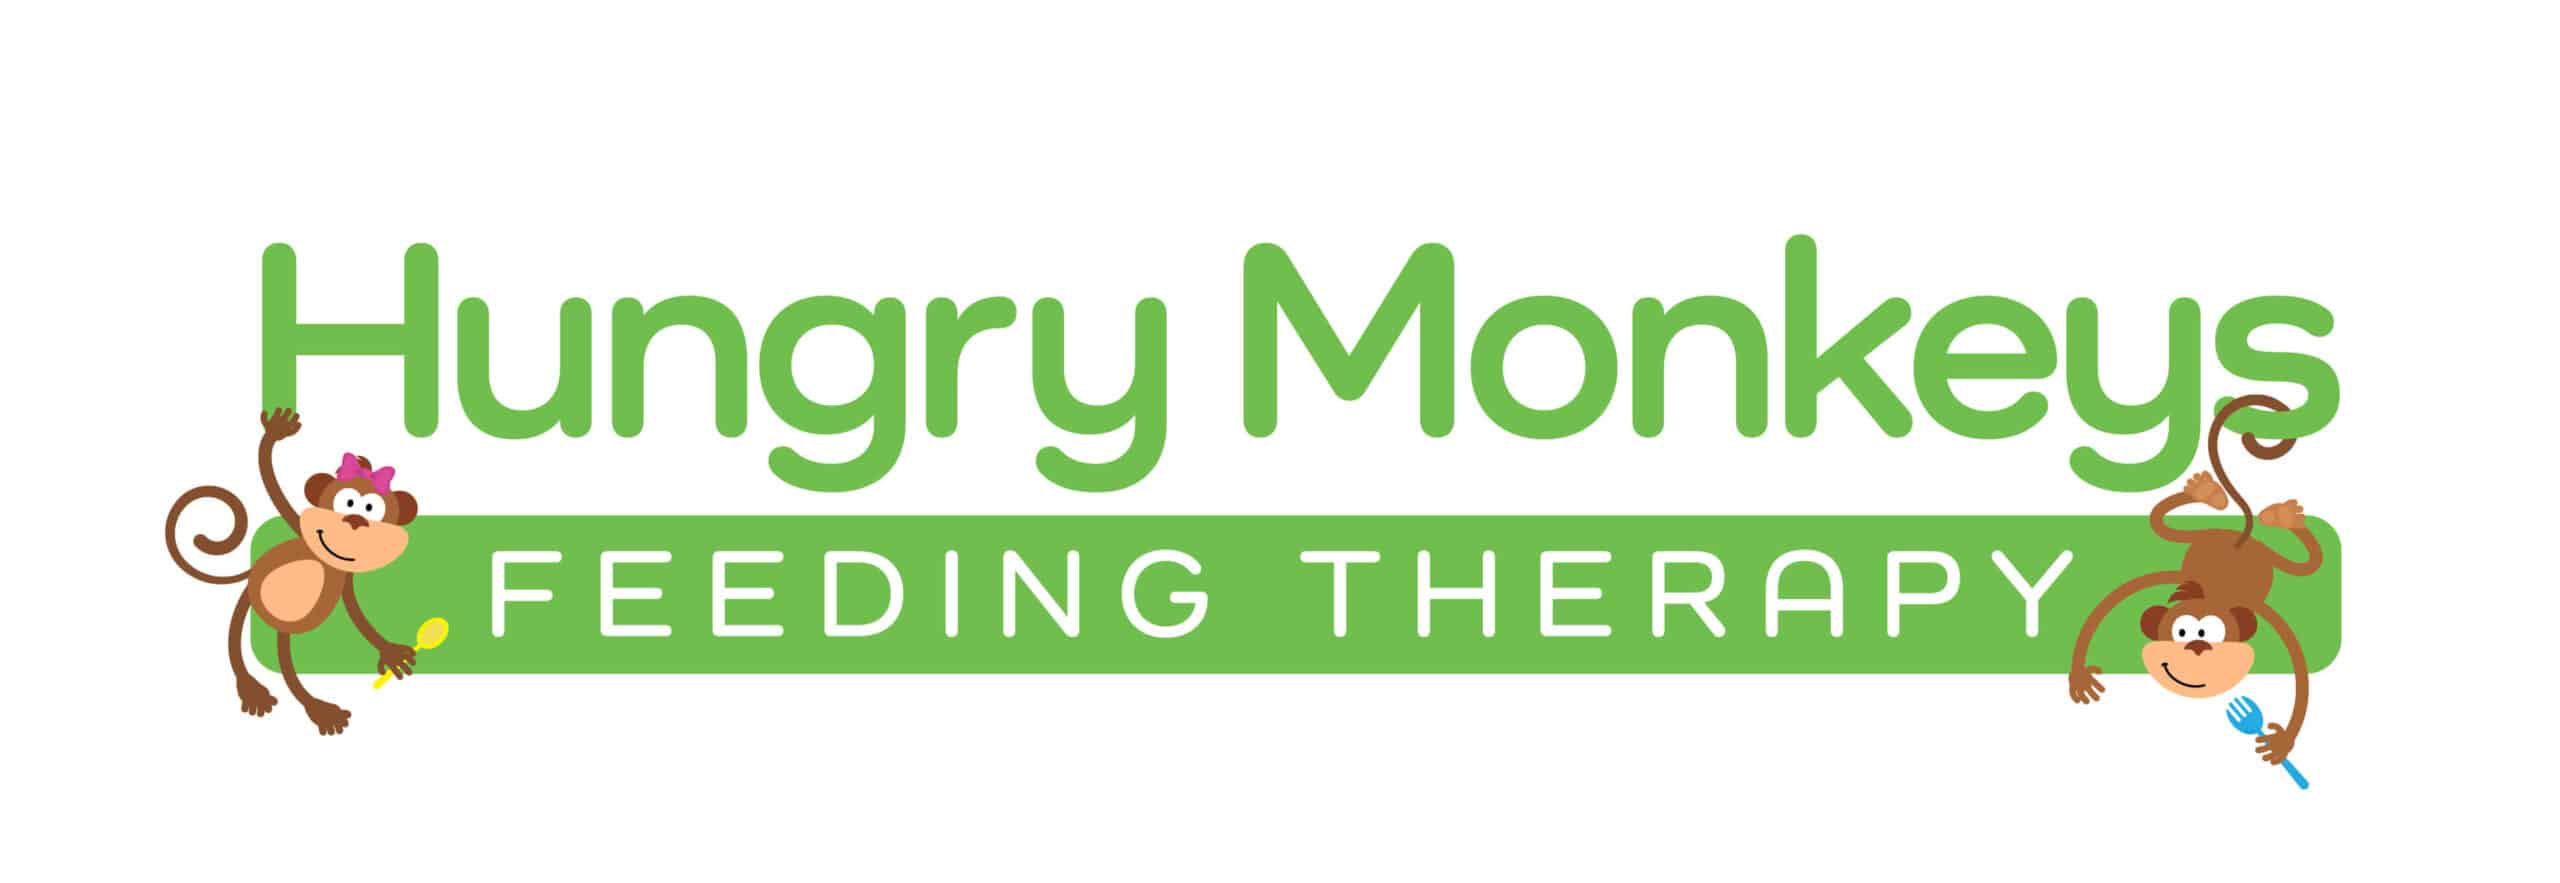 hungry monkeys logo